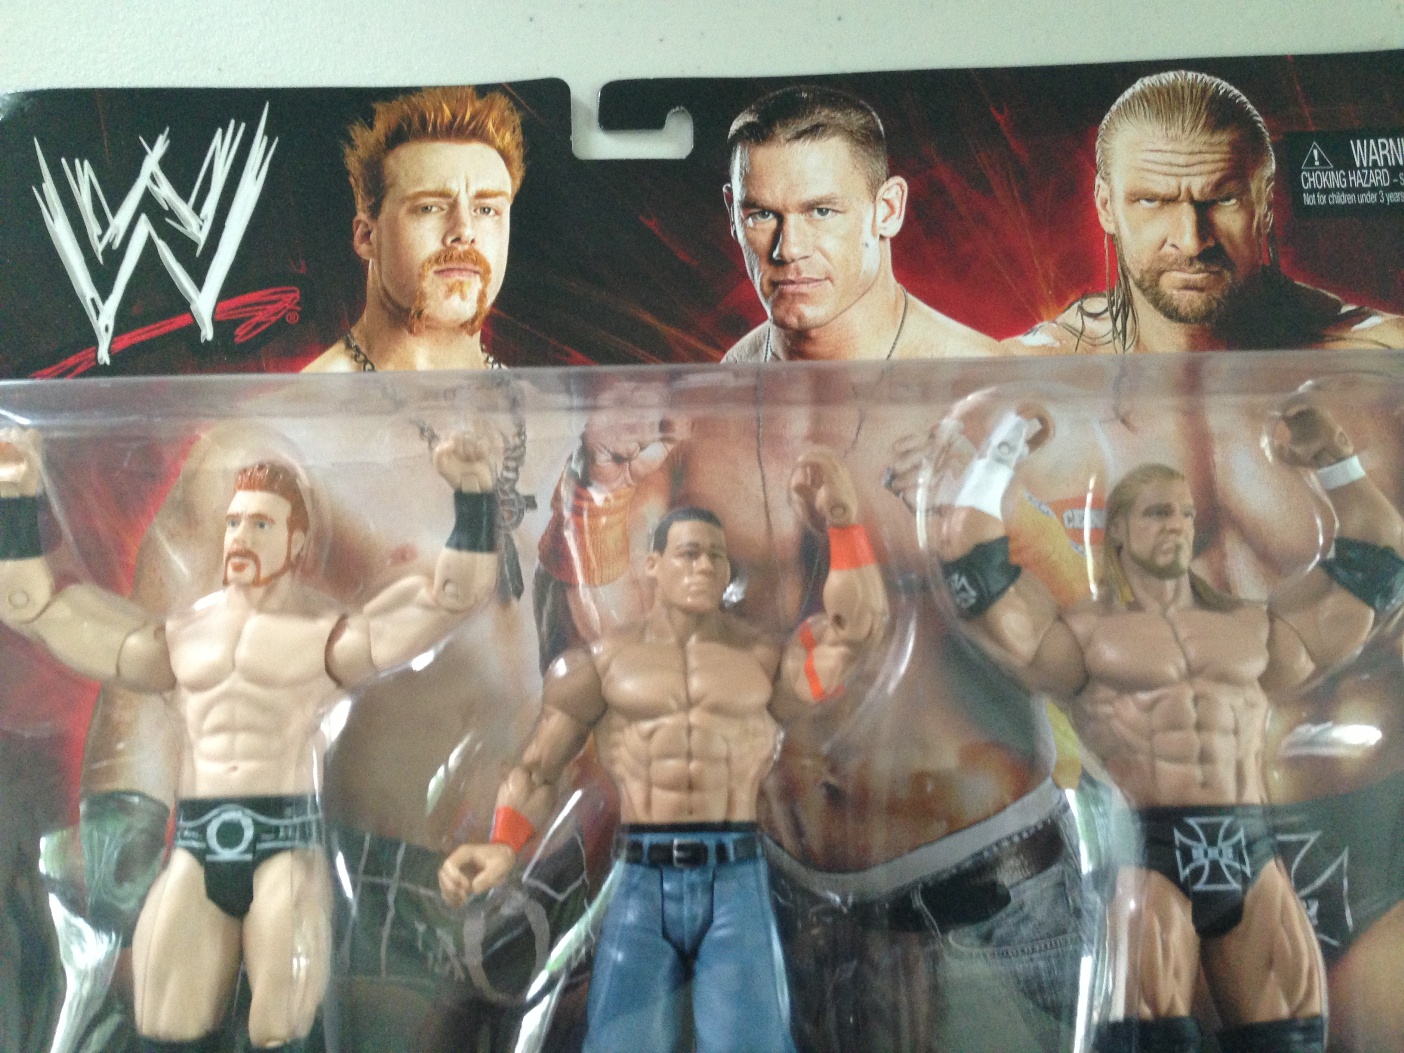 Sheamus John Cena and Triple H